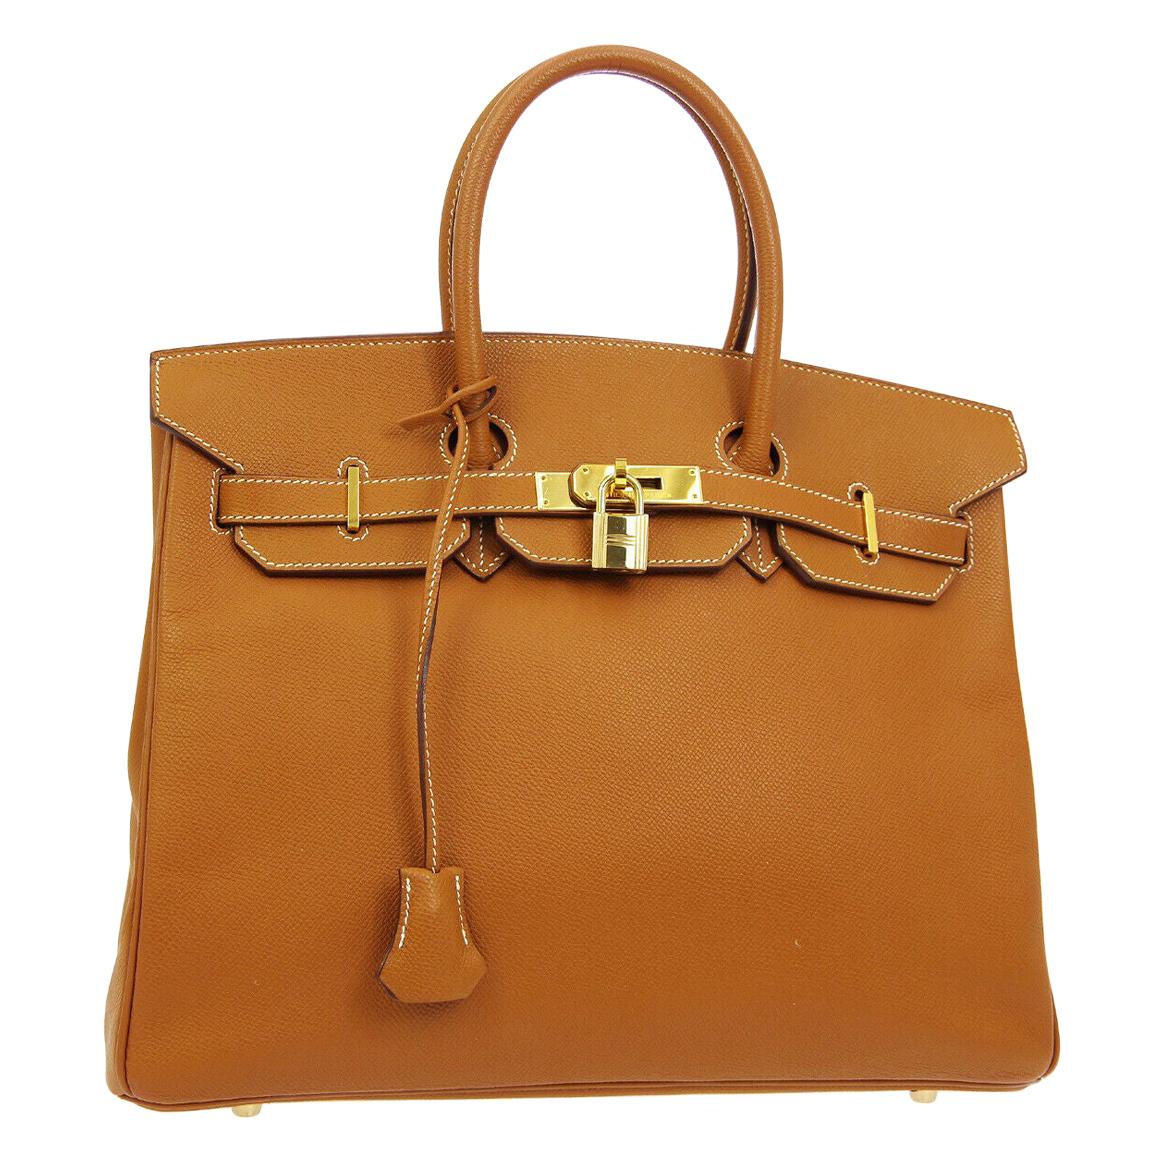 Hermes Birkin 35 Cognac Leather Top Handle Satchel Travel Tote Bag in Box